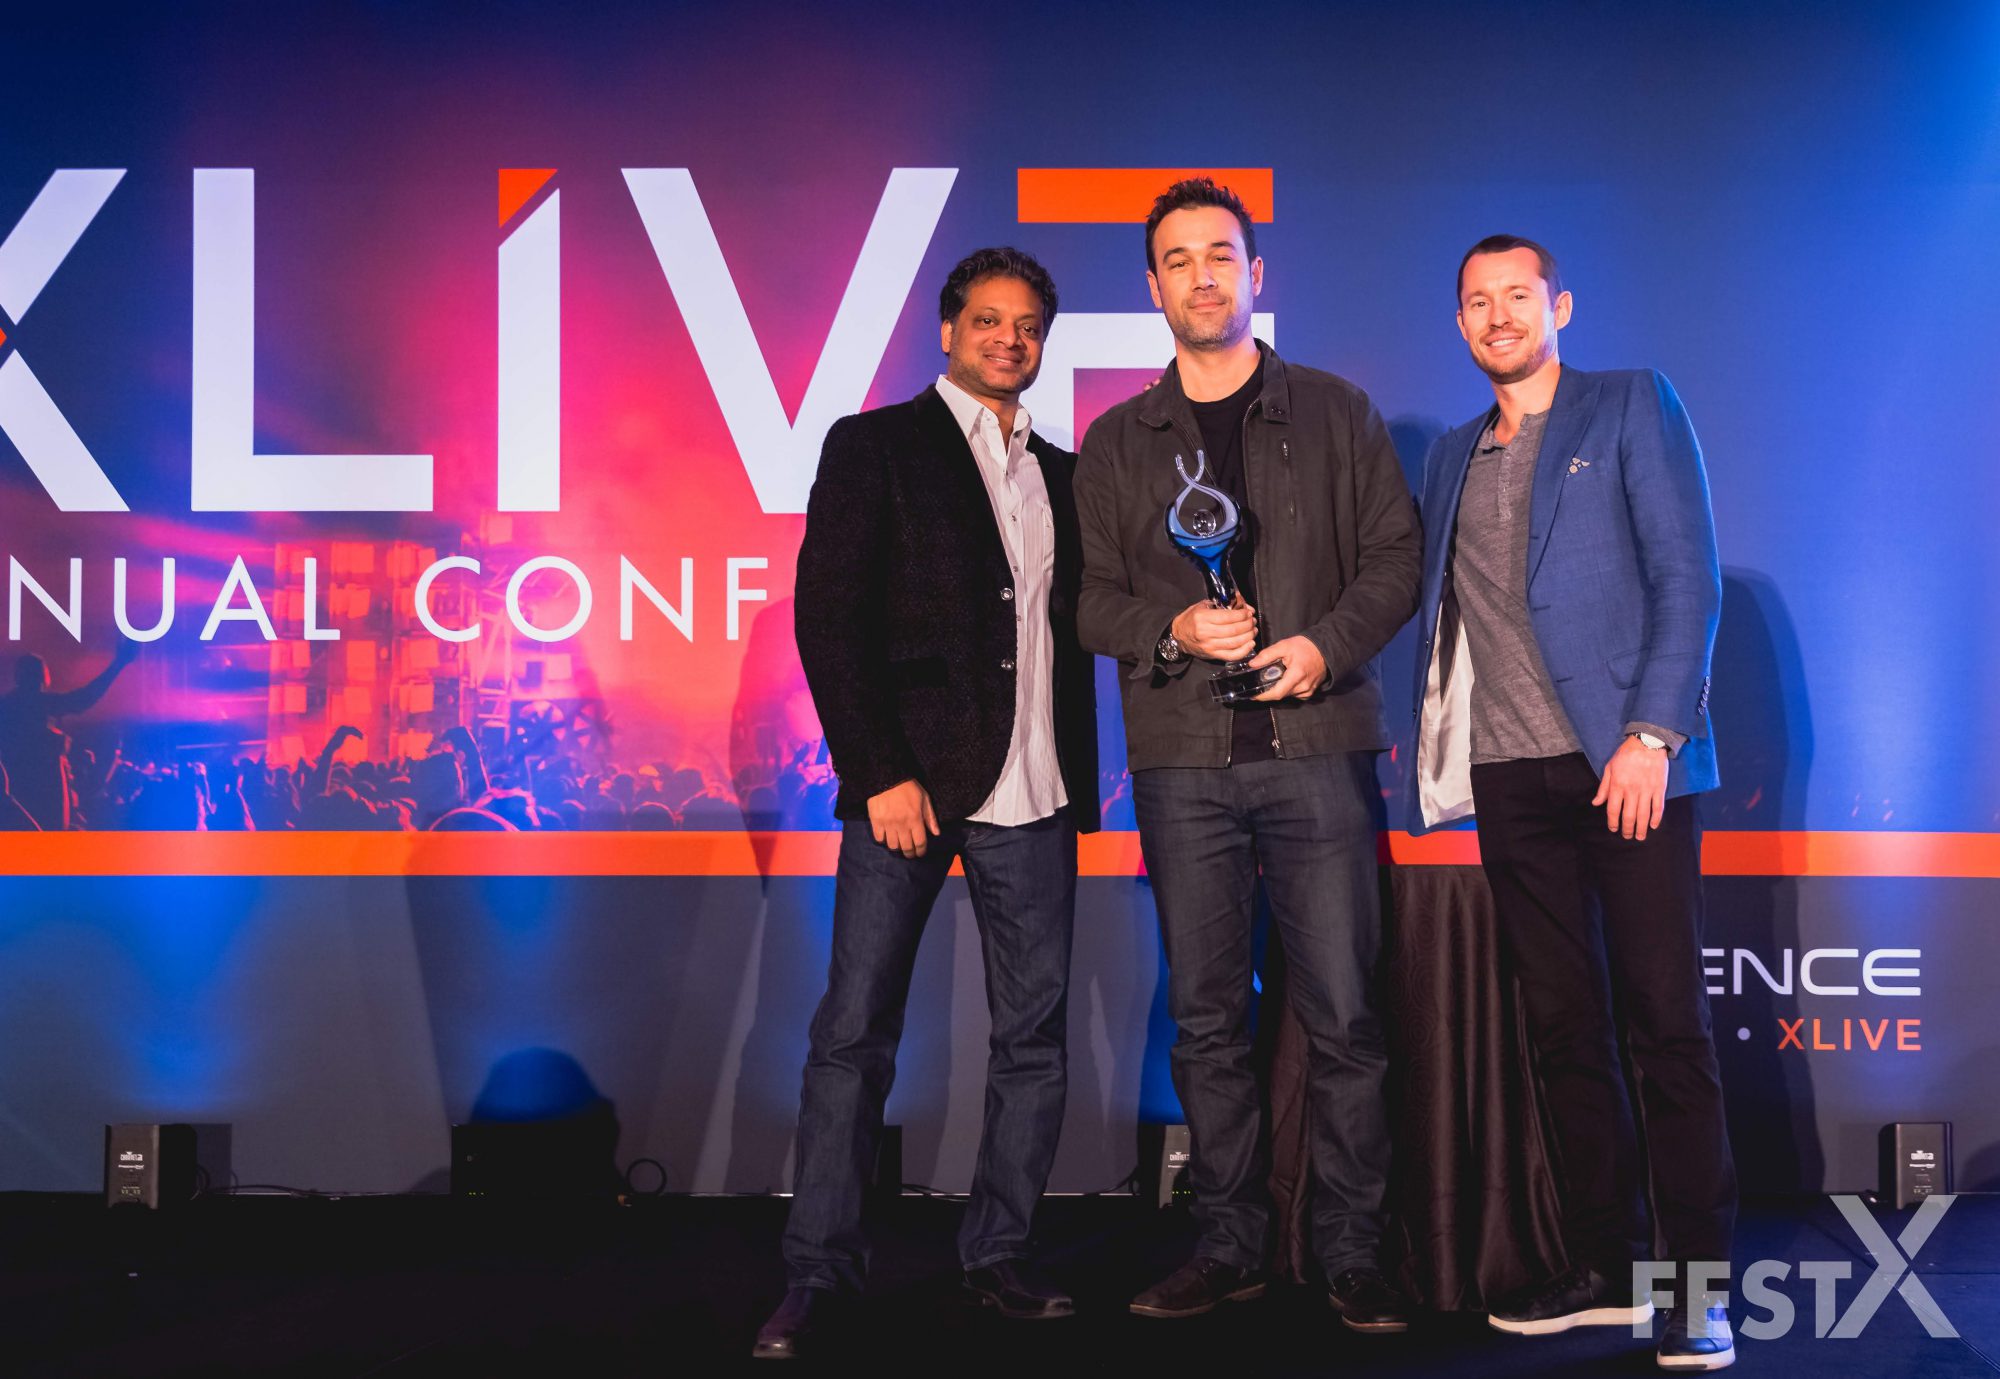 XLIVE Conference 2018 FestX Awards